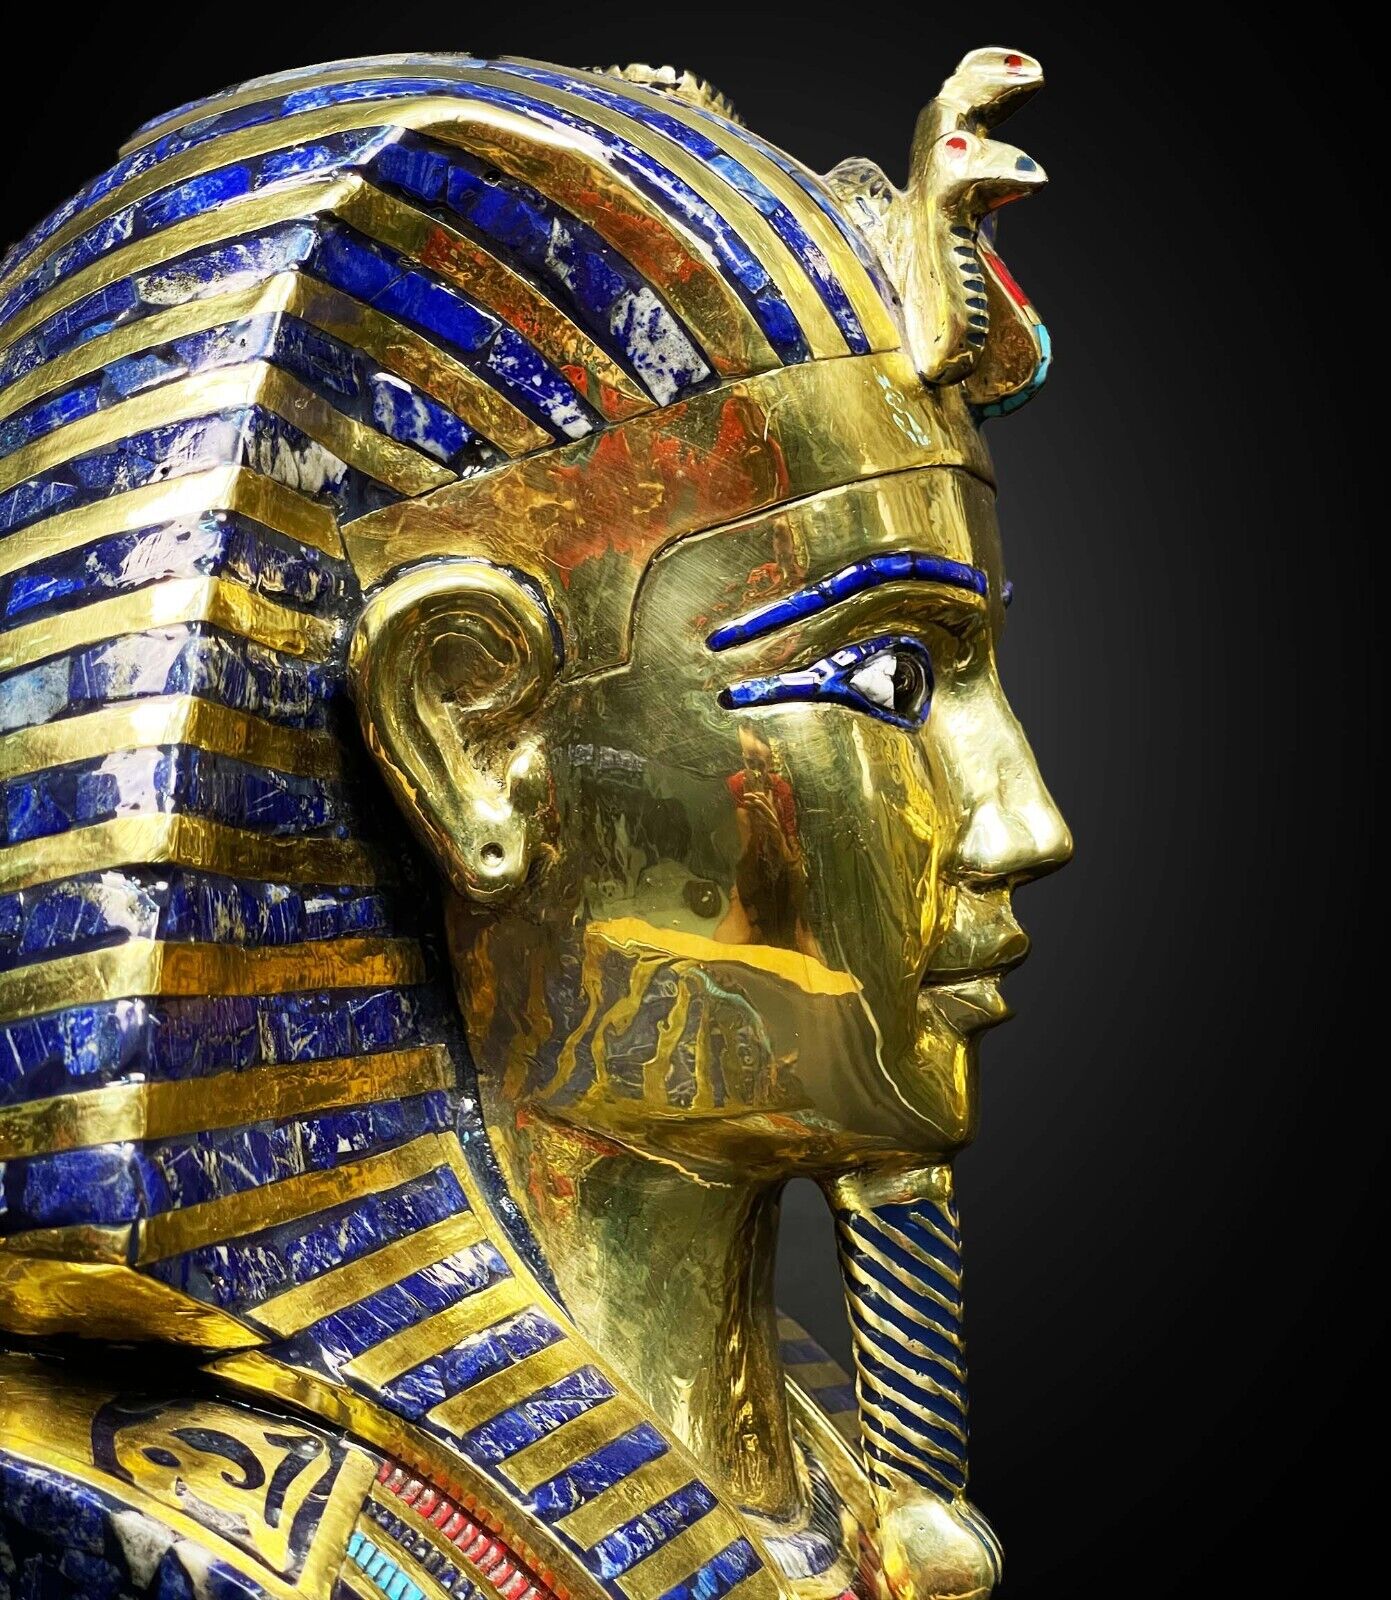 Egyptian king Tutankhamun Mask - Egyptian King Tut, The only one in the world